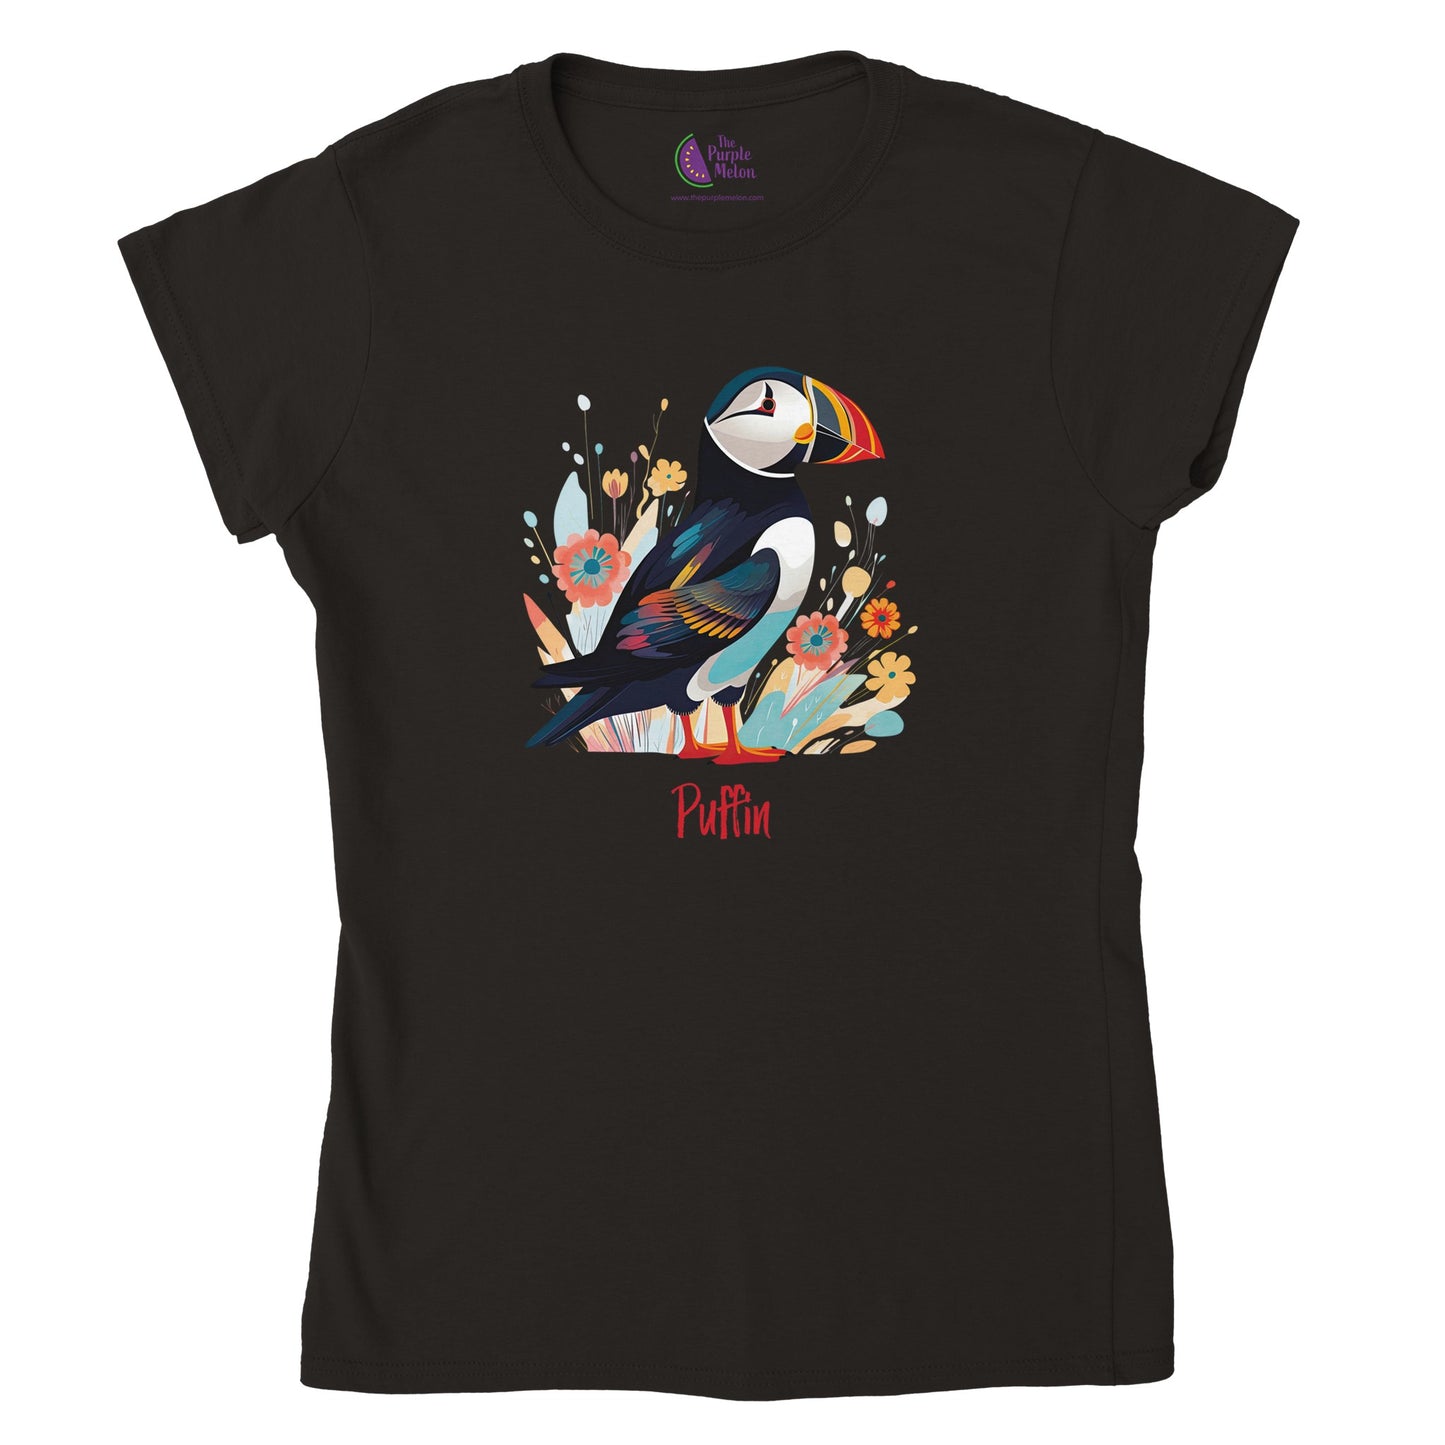 black t-shirt with a puffin bird print